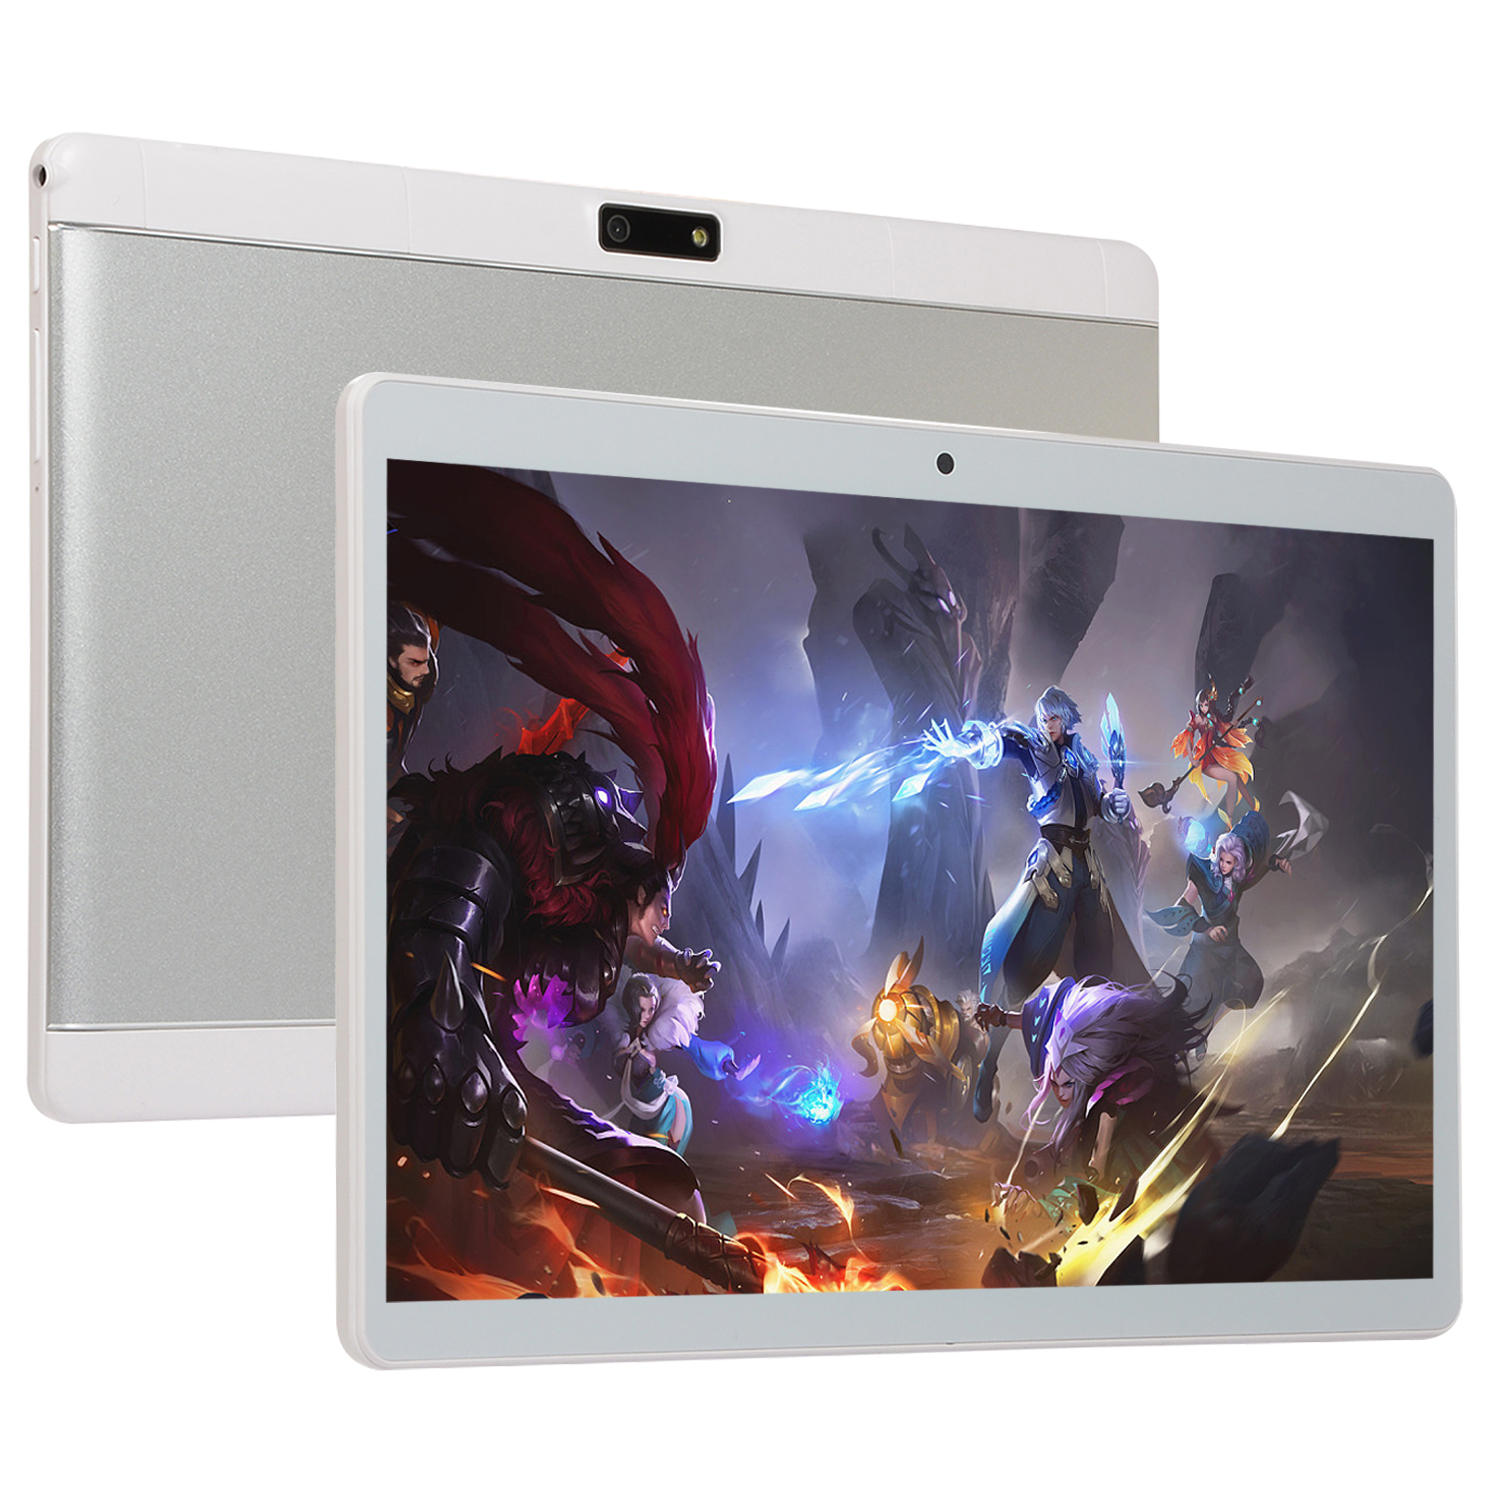 OPPQ Tablet แท็บเล็ต แท็บเล็ตถูกๆ เรียนออนไลน์ 【Andorid】ข้อเสนอที่ดีที่สุด แท็ปเล็ต 10.1นิ้ว Android 10.0 Octa Core 10.1 Inch Tablet PC 8GB RAM 512GB ROM WIFI Tempered Glass Screen Resolution 2560 * 1600 HD Camera Tablet